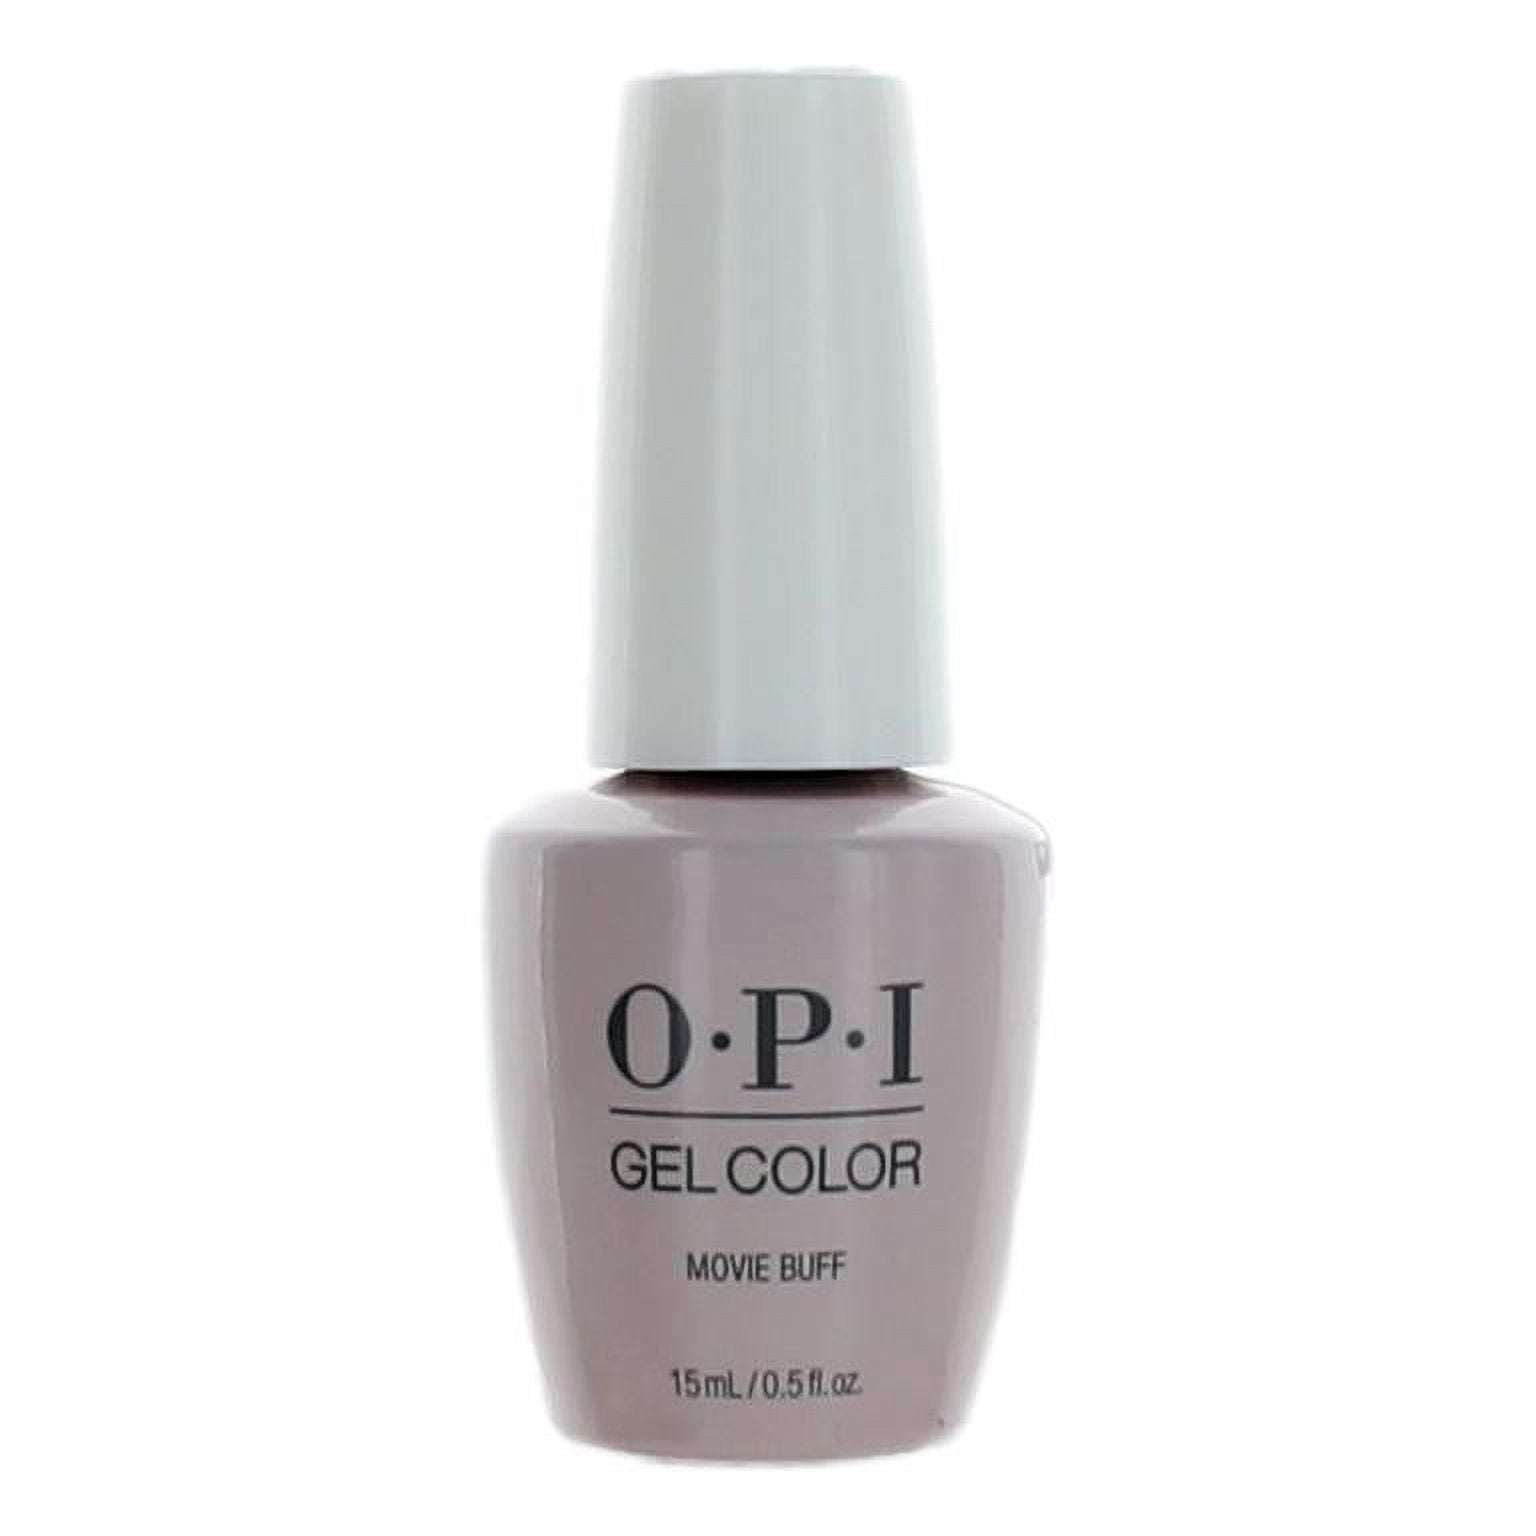 OPI®: Gemini and I - Nail Lacquer | Soft White Nude Nail Polish